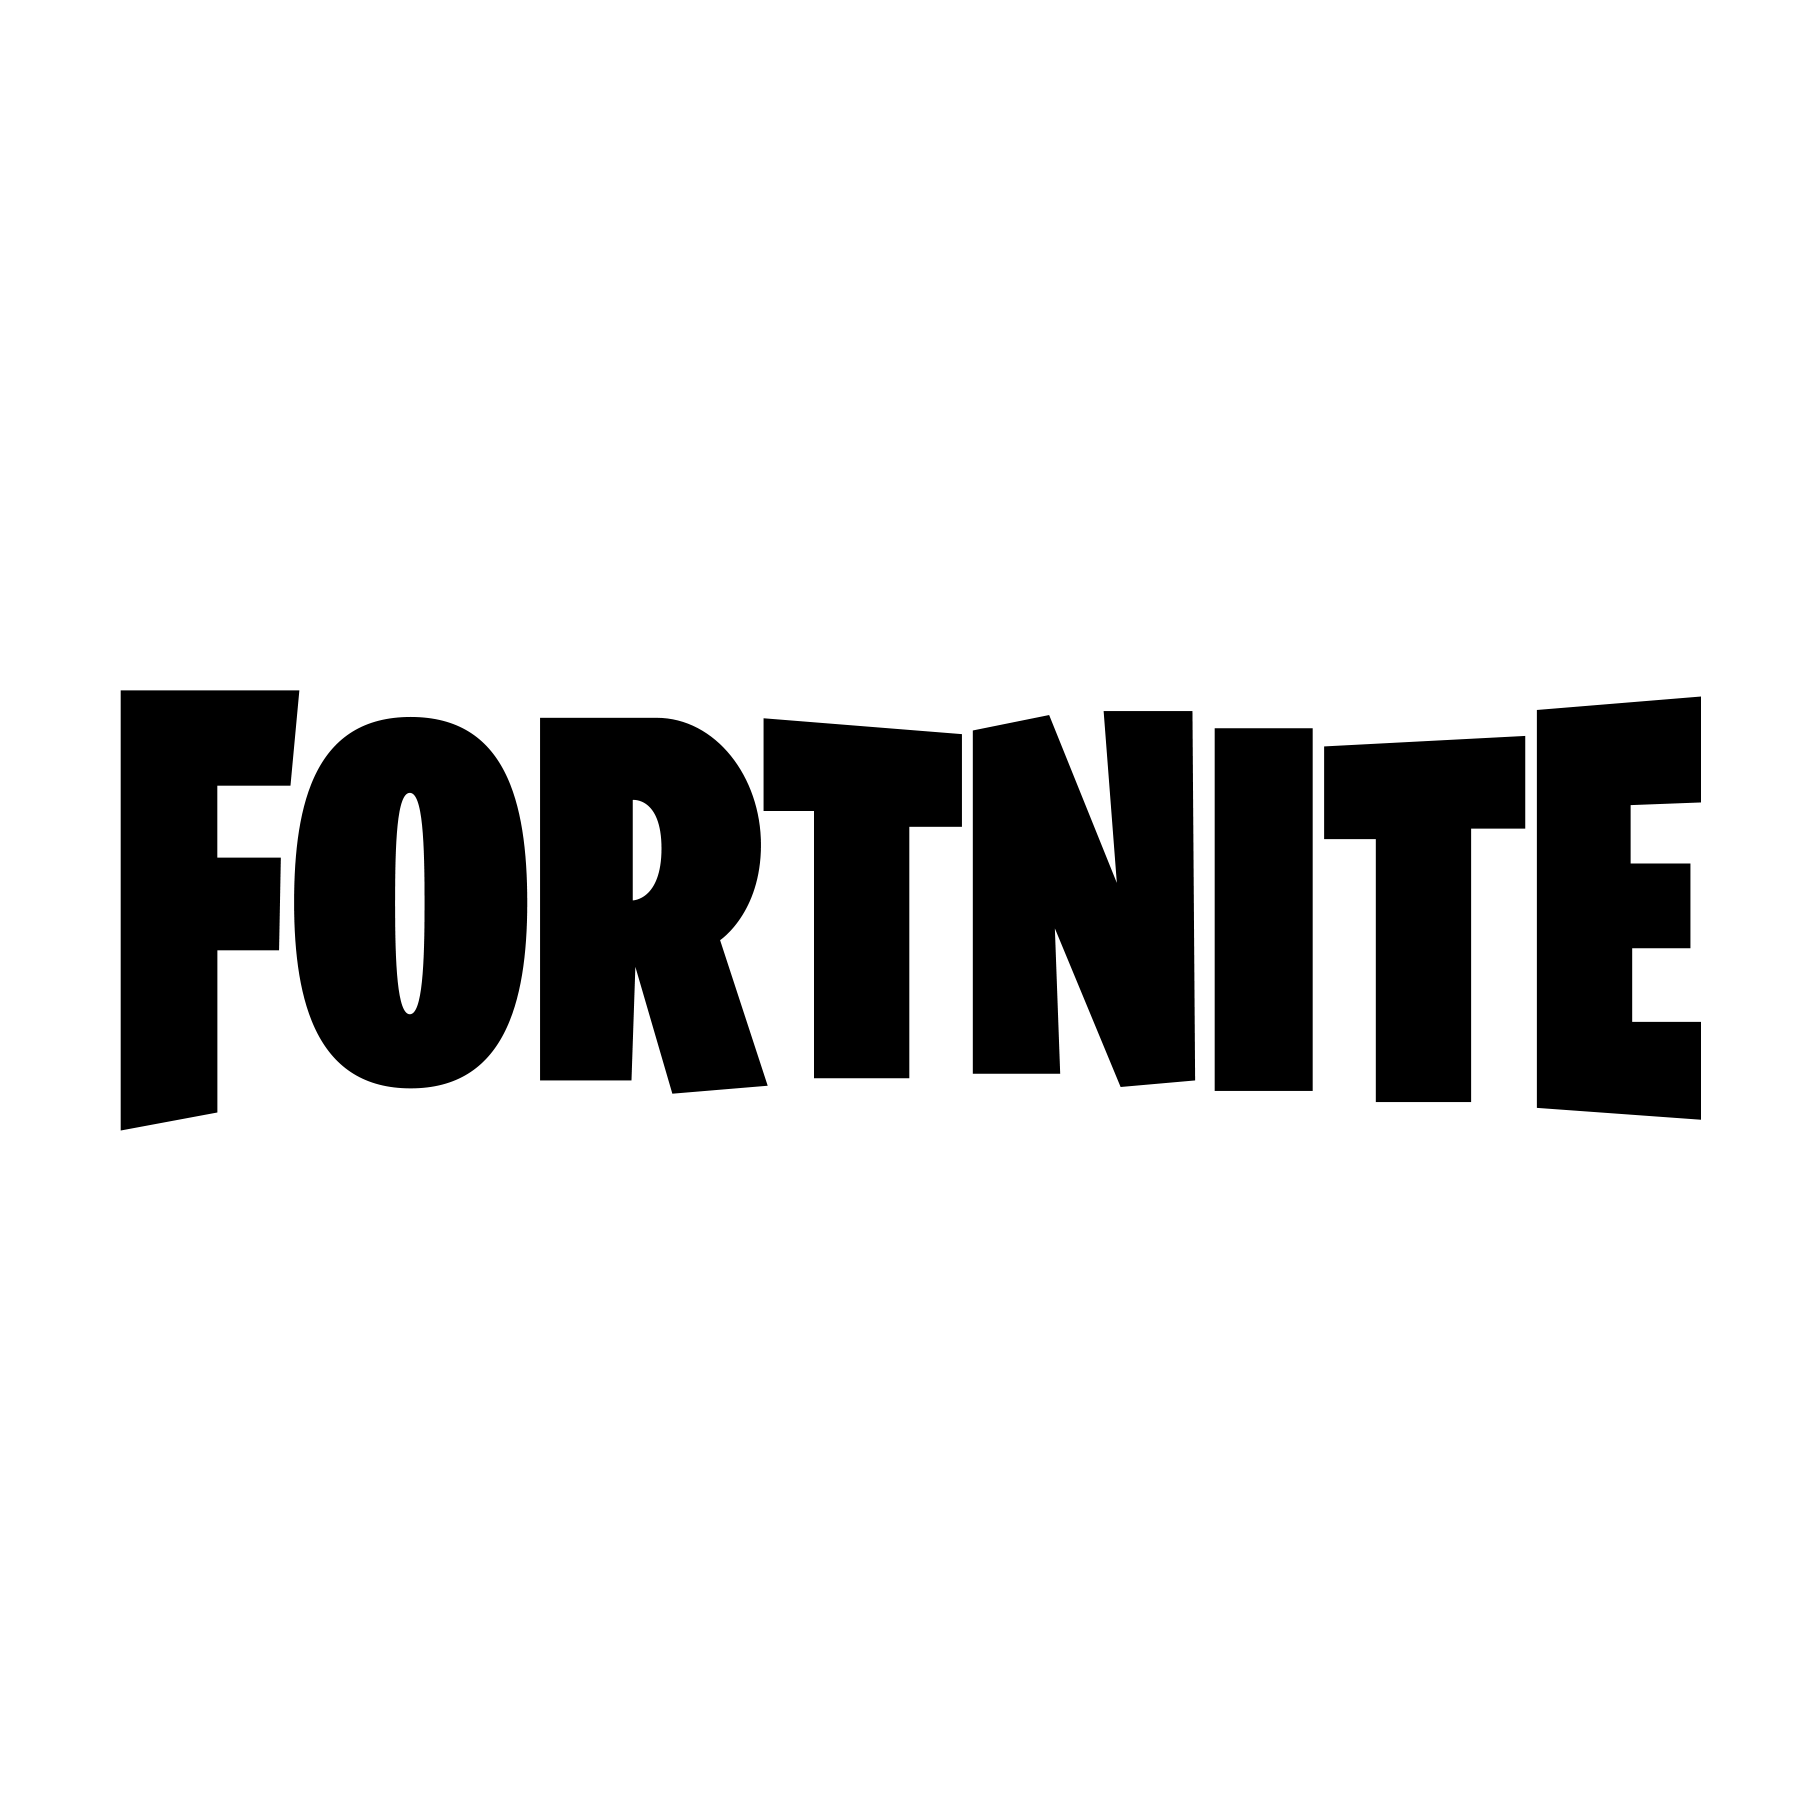 Fortnite PNG, Fortnite Logo, Fortnite Characters And Skins Image Free Download Transparent PNG Logos